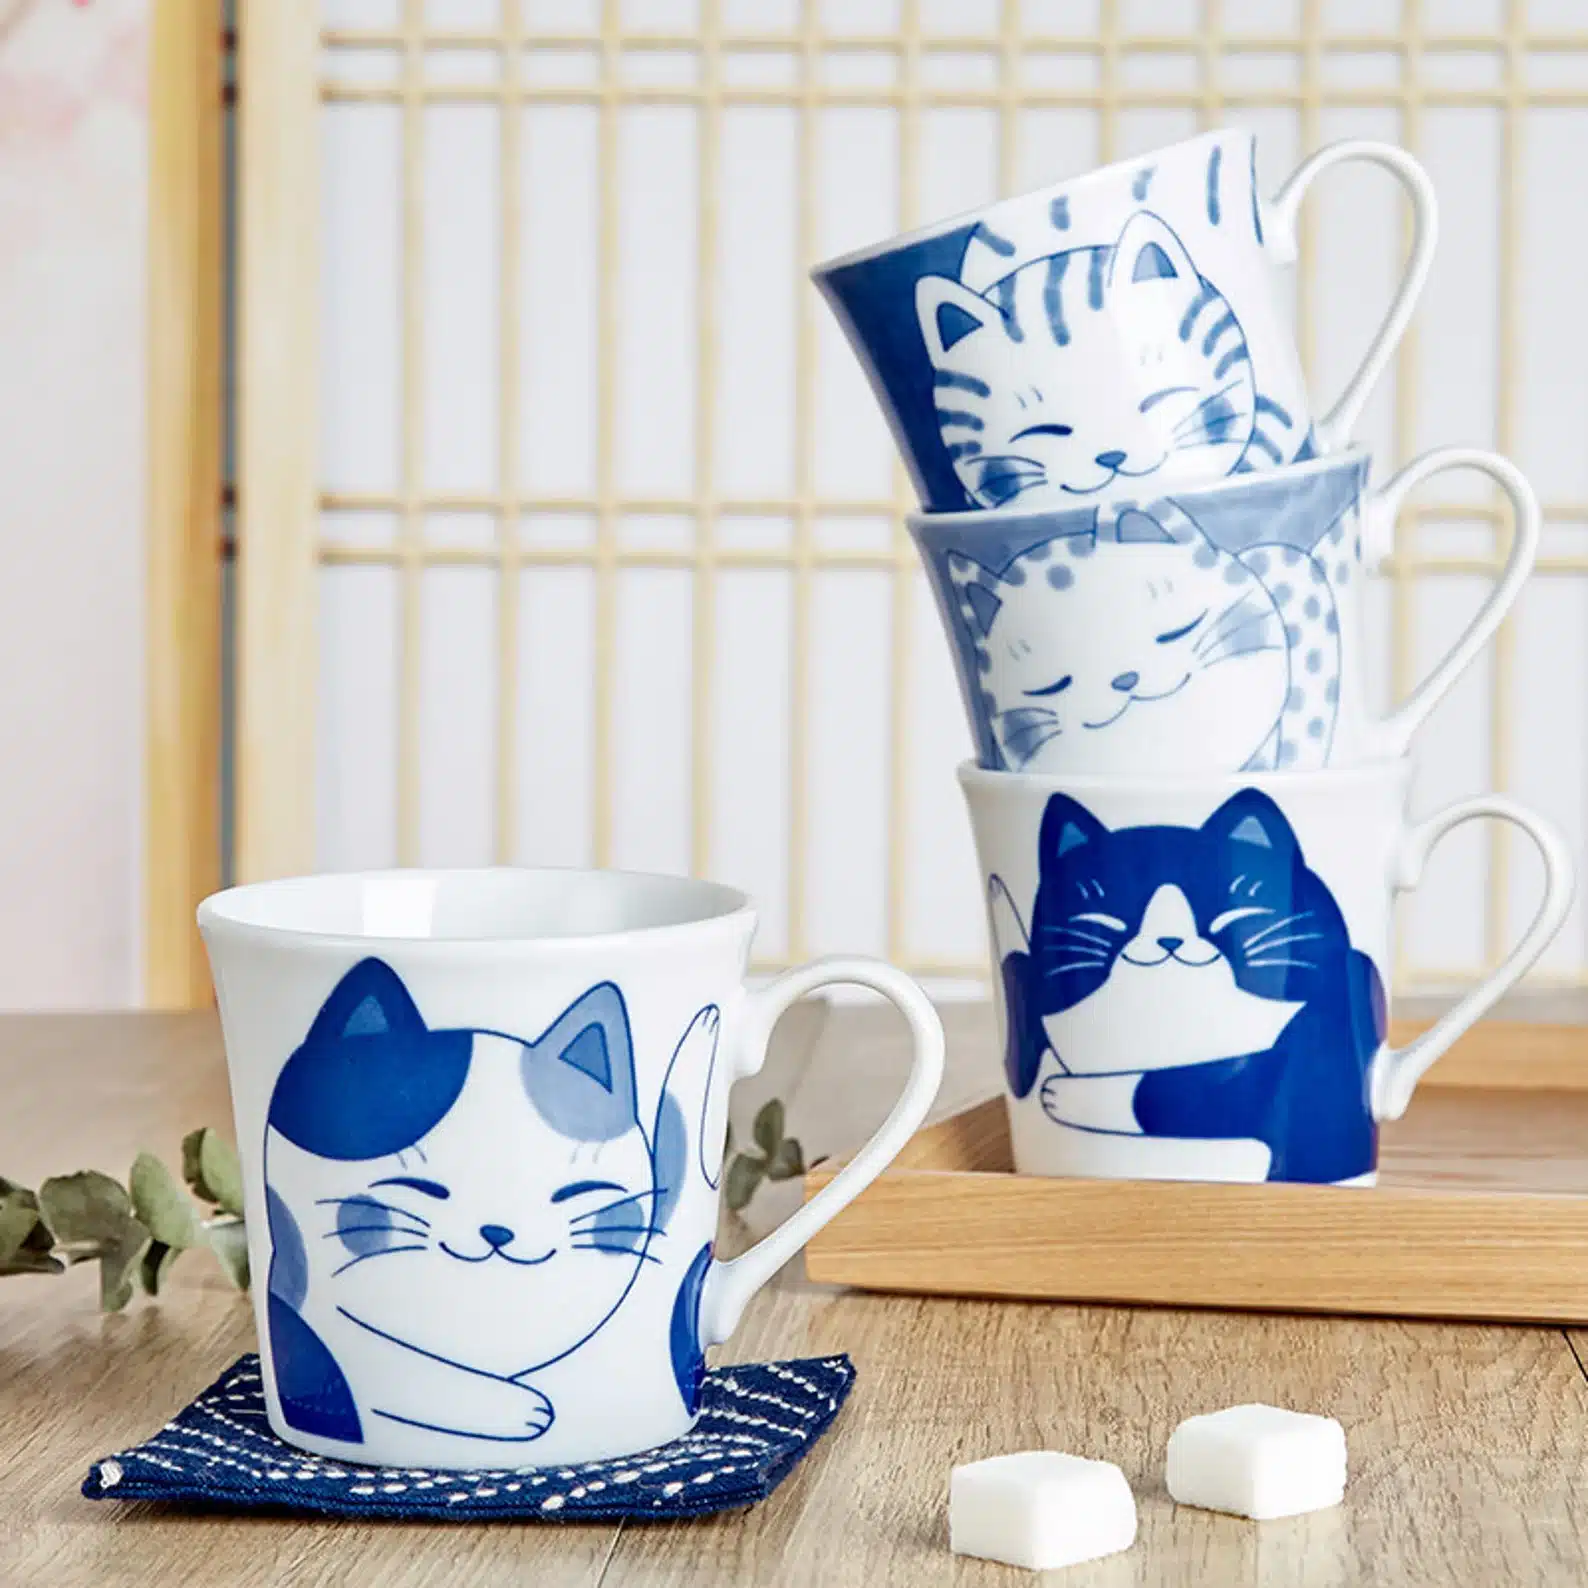 Ceramic Mug With Cute Lucky Cat